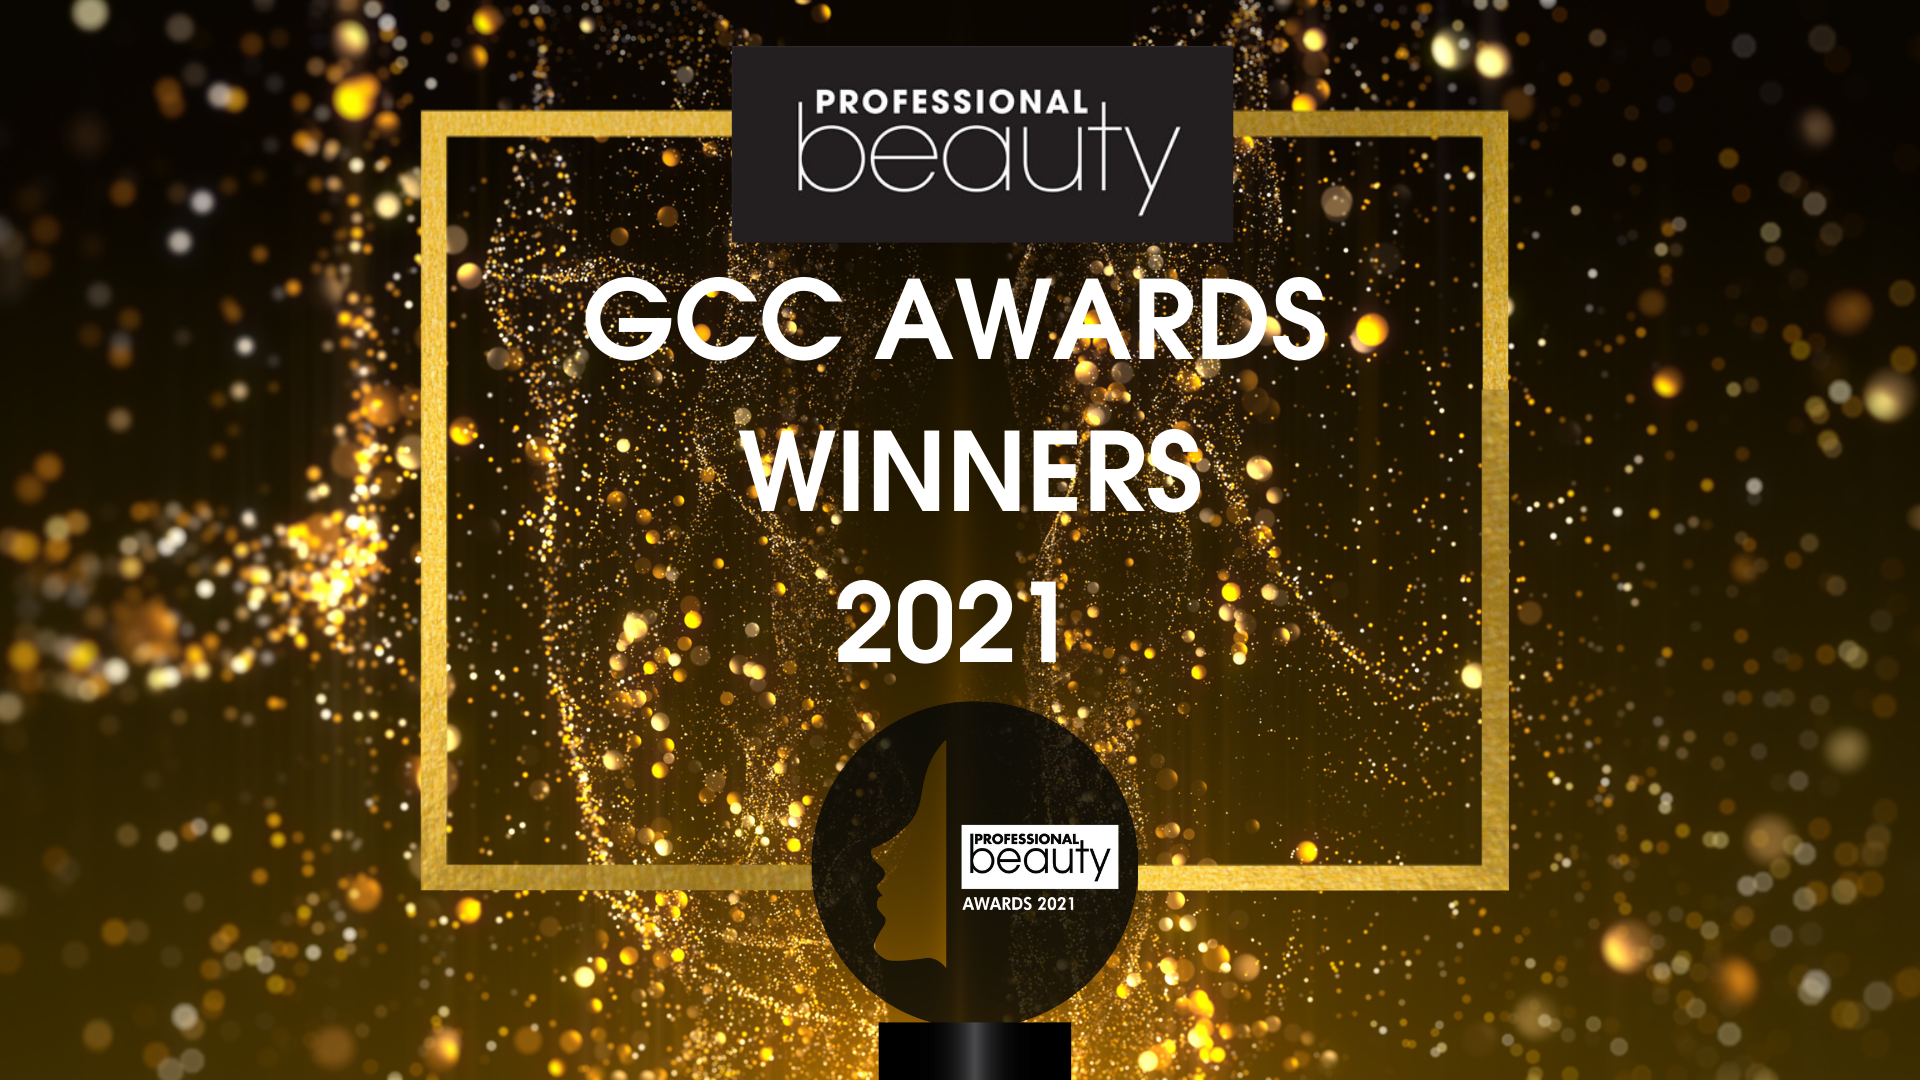 Professional Beauty Gcc Awards Winners